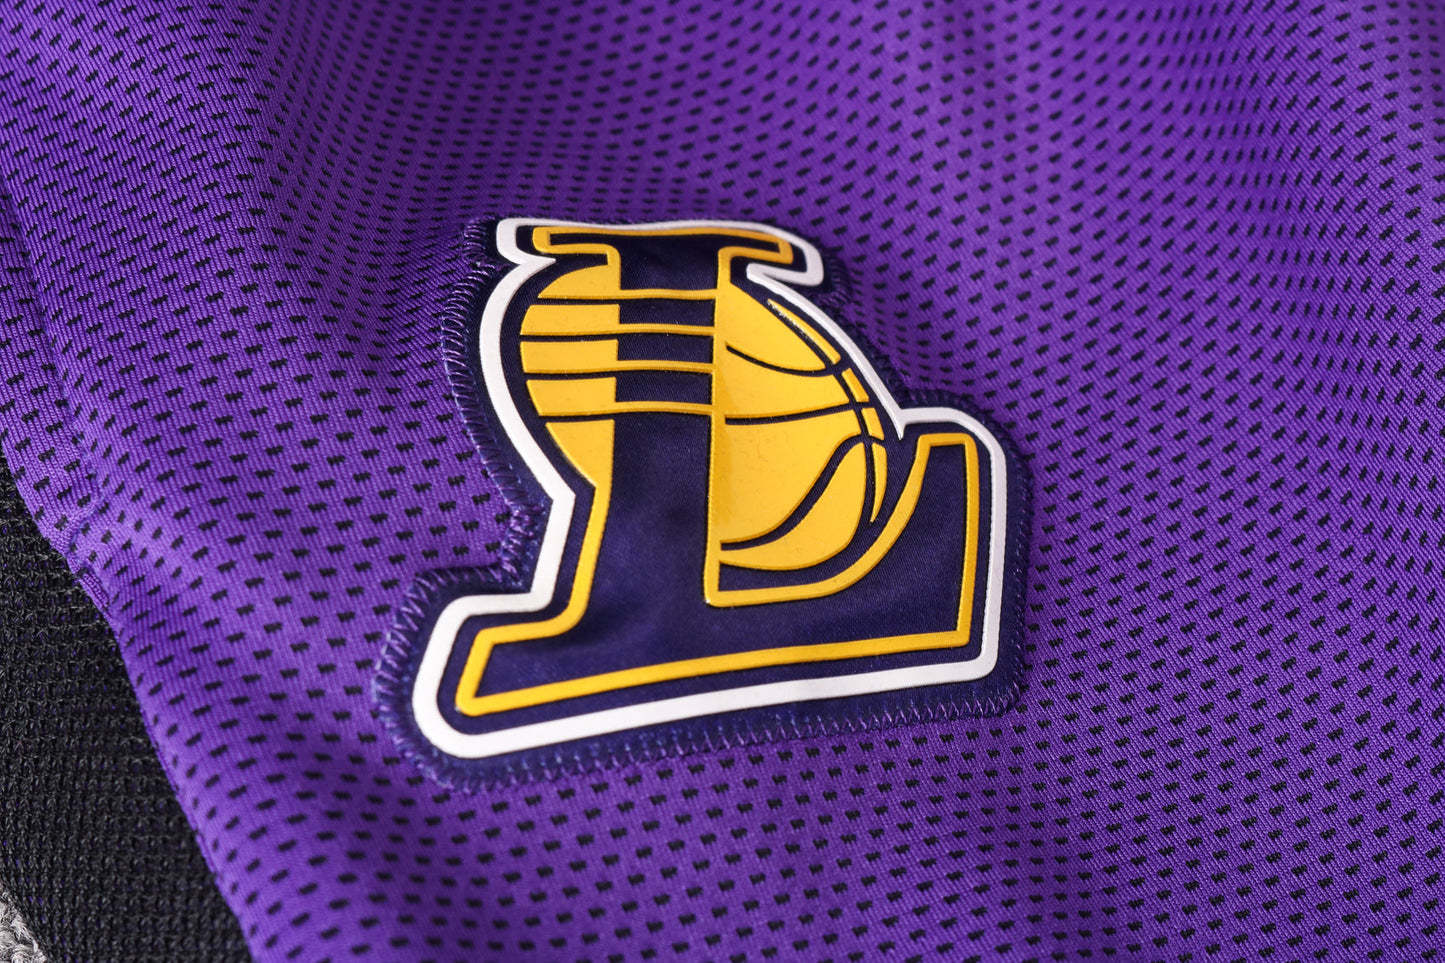 Conjunto Nike Therma Flex Los Angeles Lakers Treino